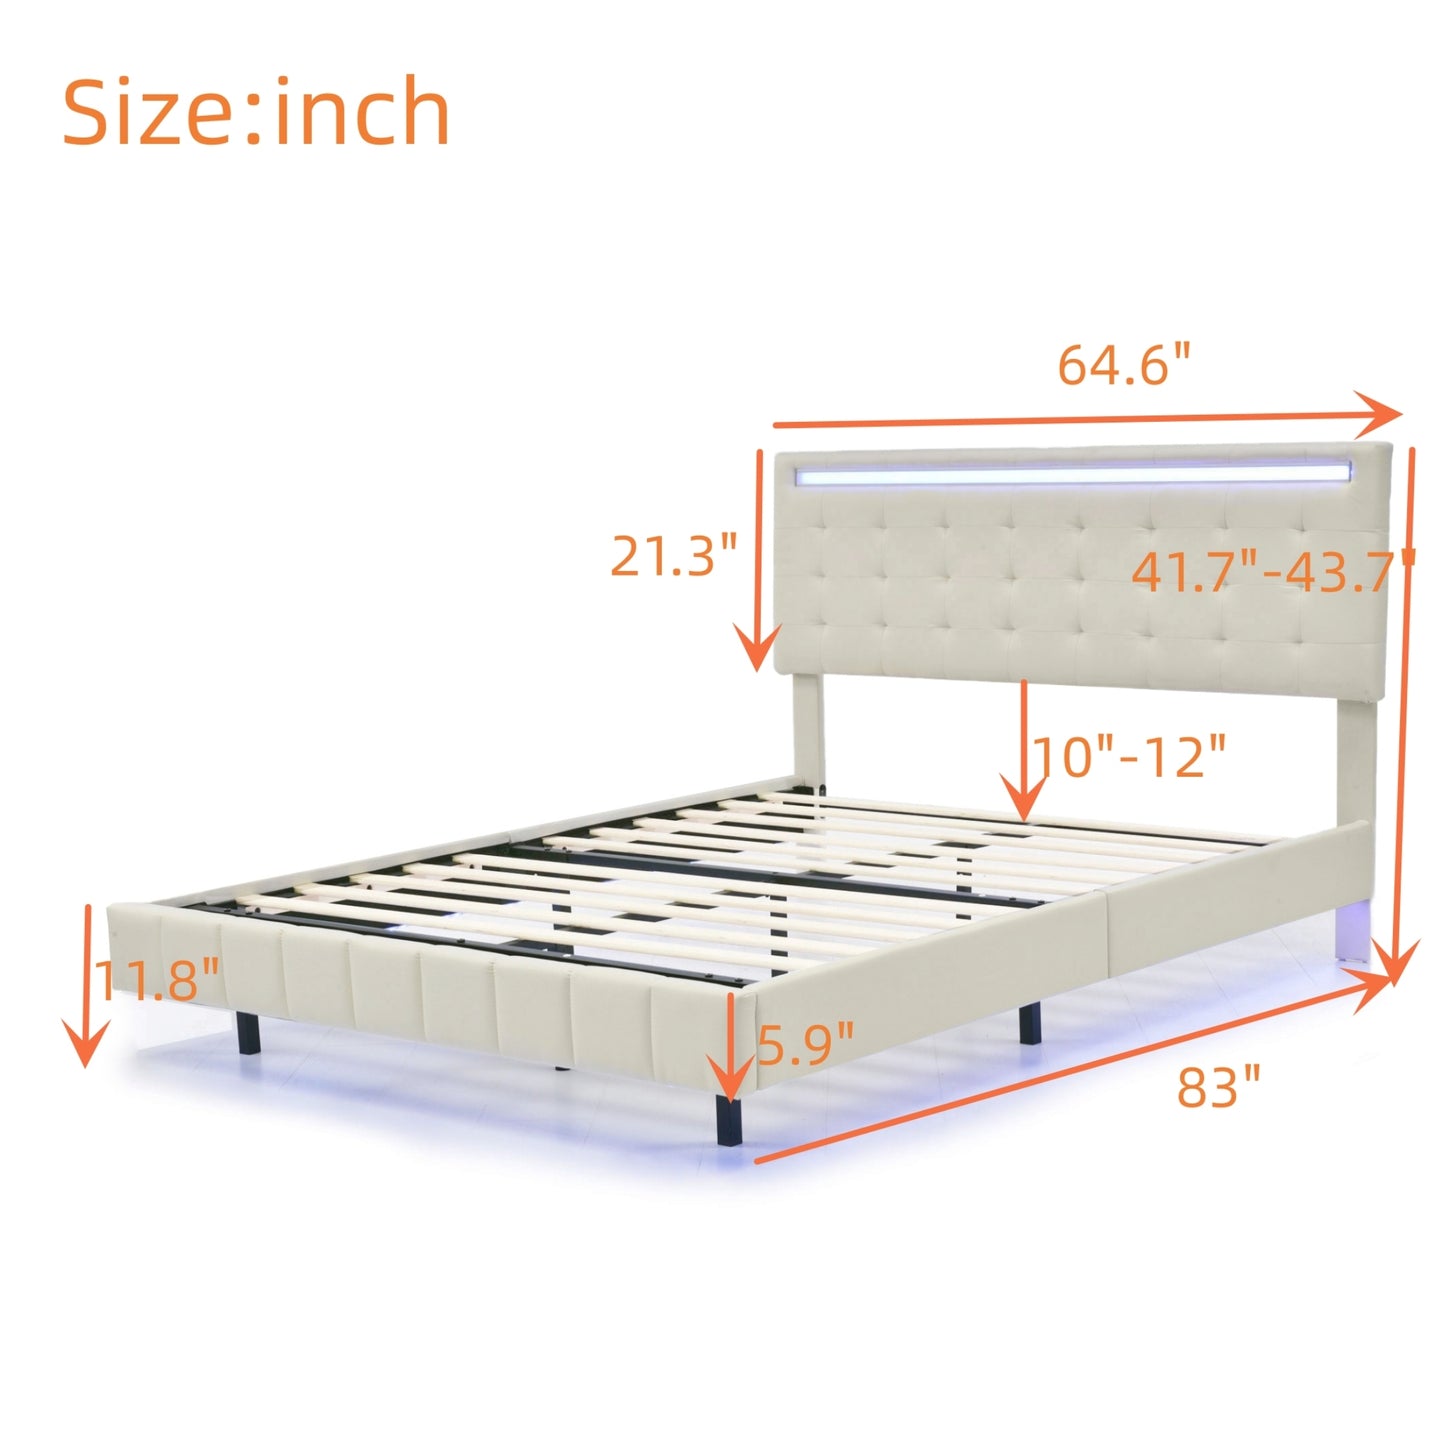 Queen Size Floating Bed Frame with LED Lights and USB Charging,Modern Upholstered Platform LED Bed Frame,Beige - Enova Luxe Home Store